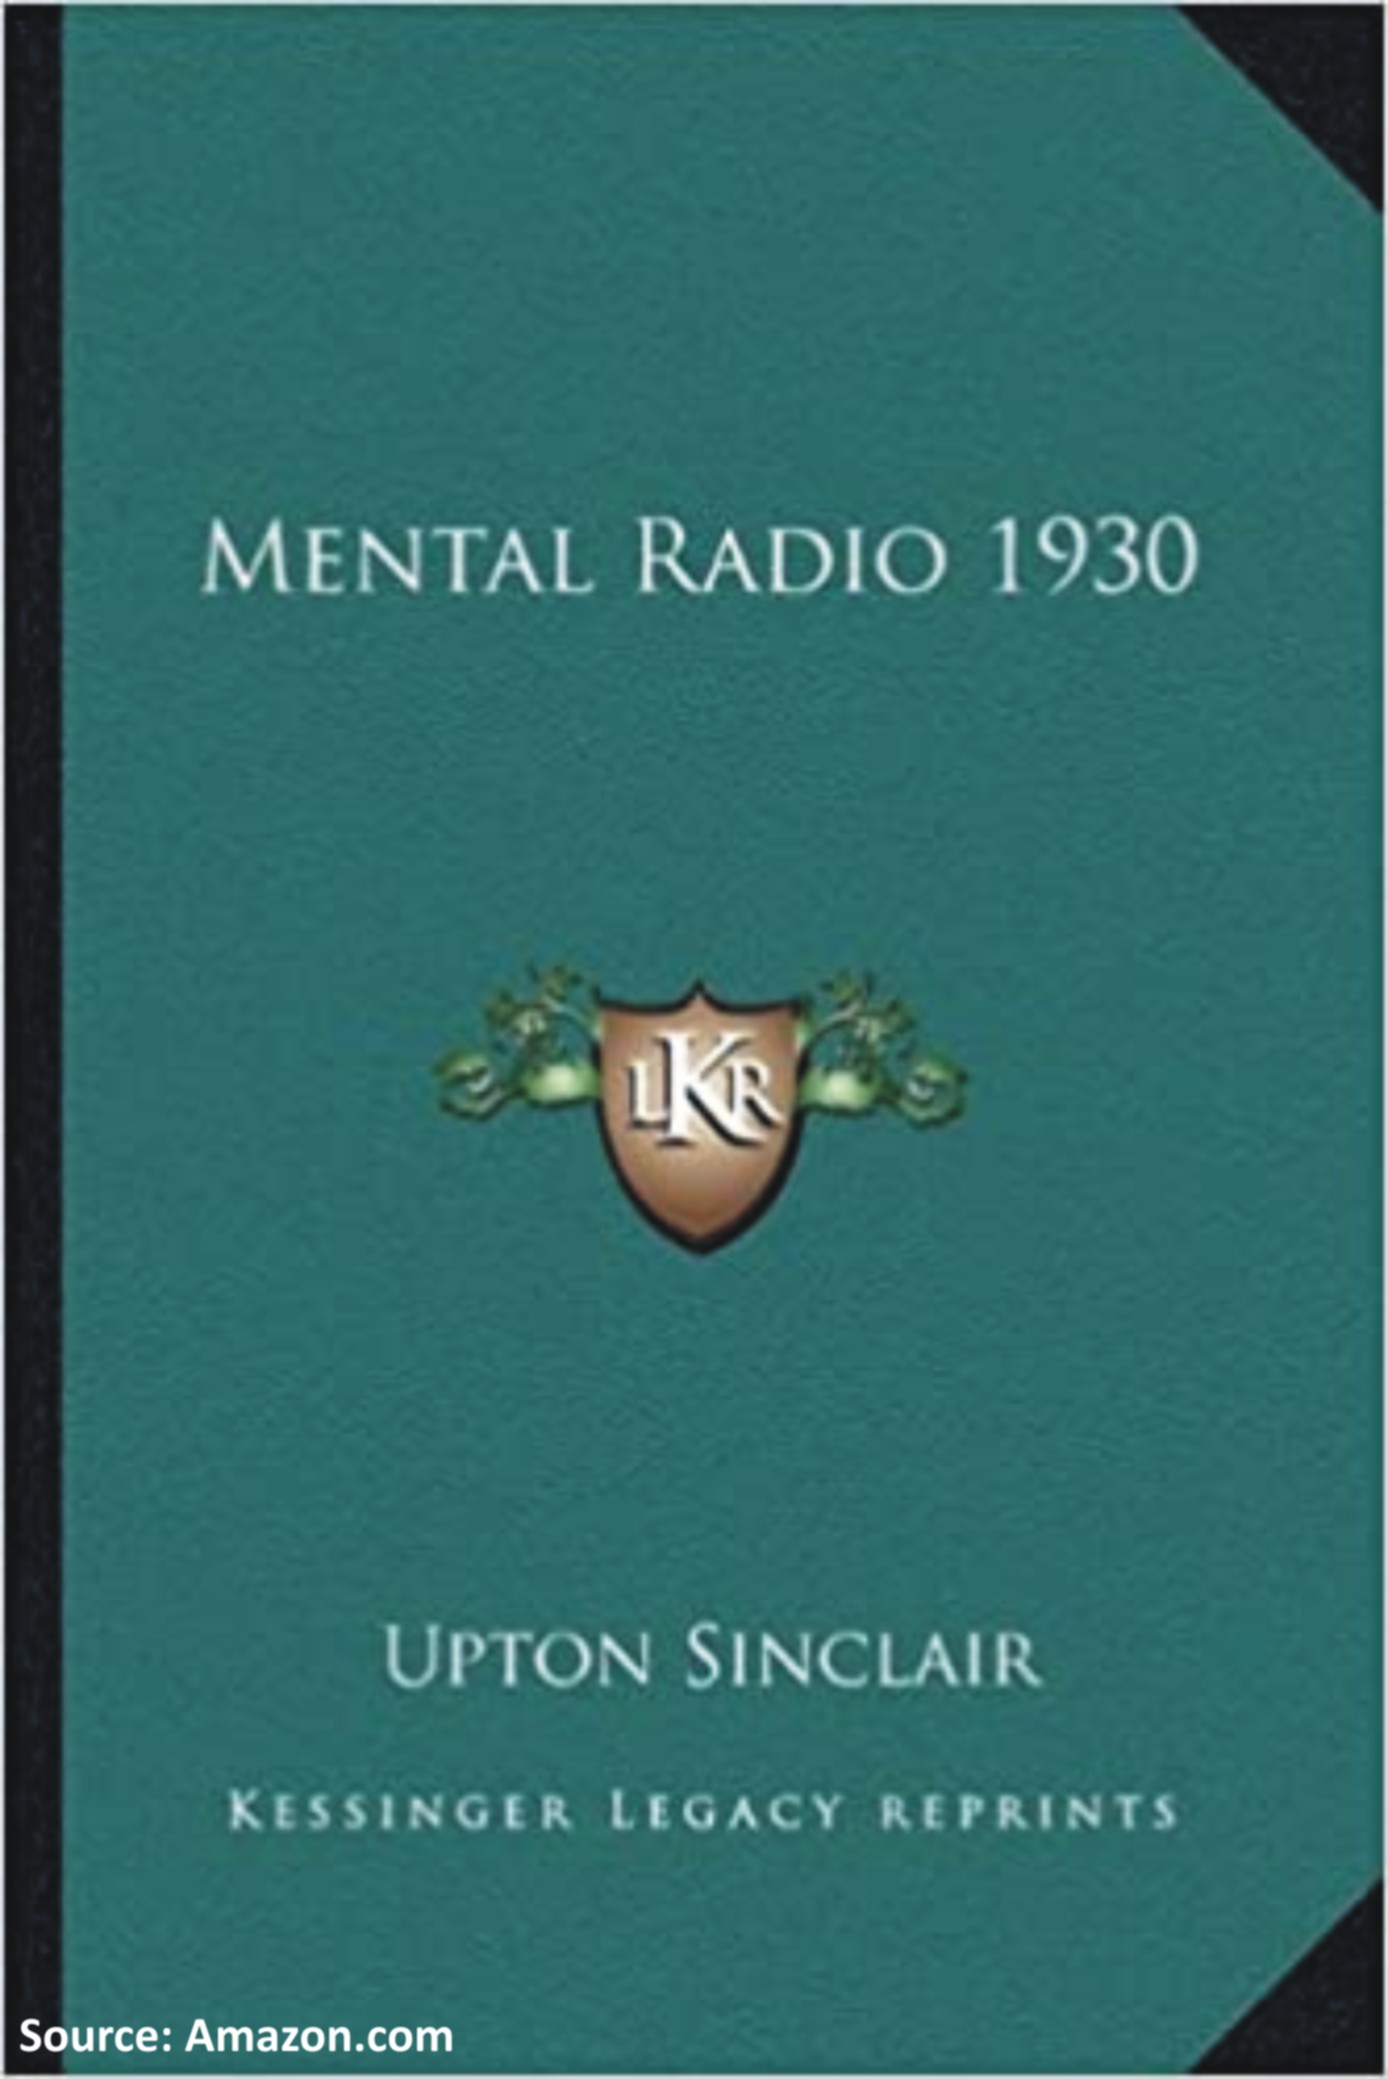 Mental Radio book cover